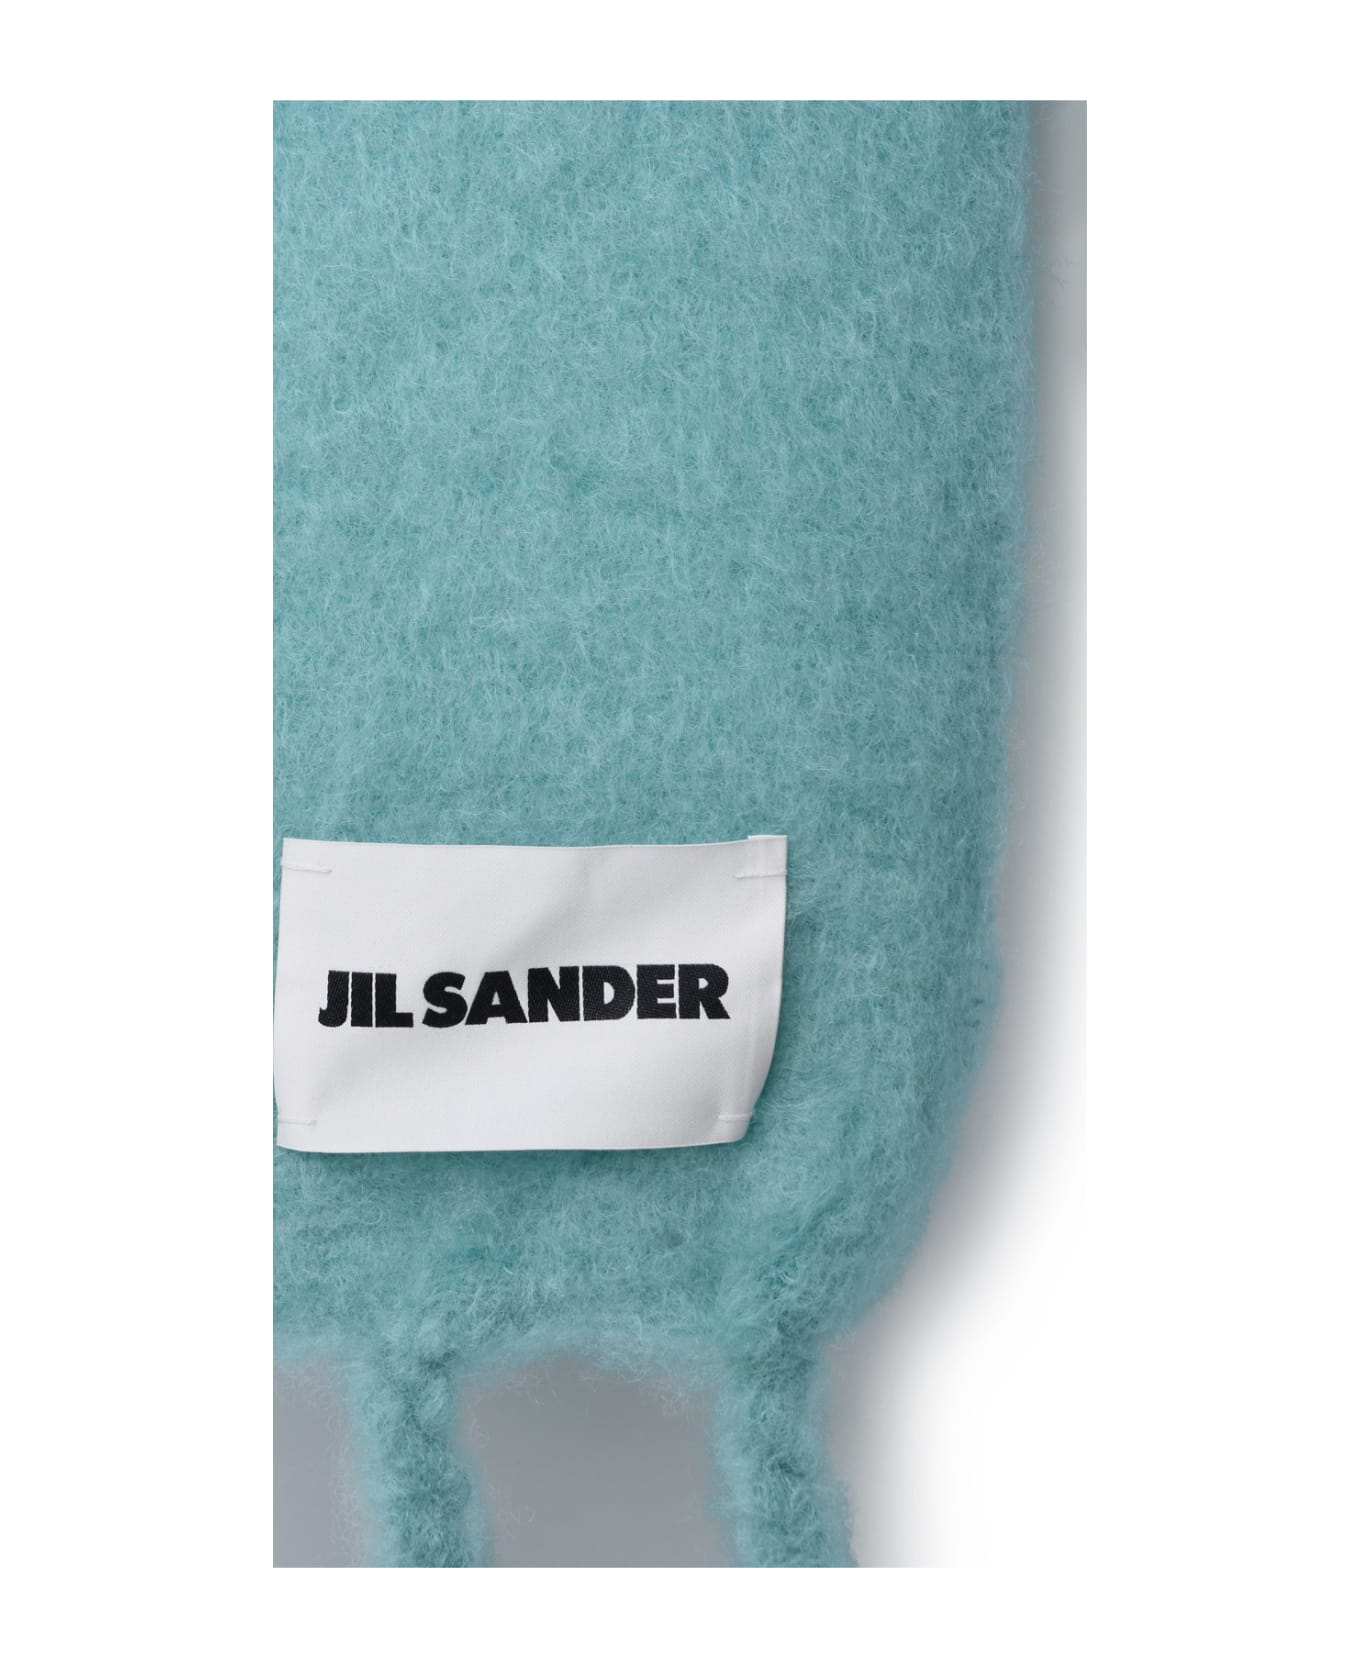 Jil Sander Teal Wool Blend Scarf - Light Blue